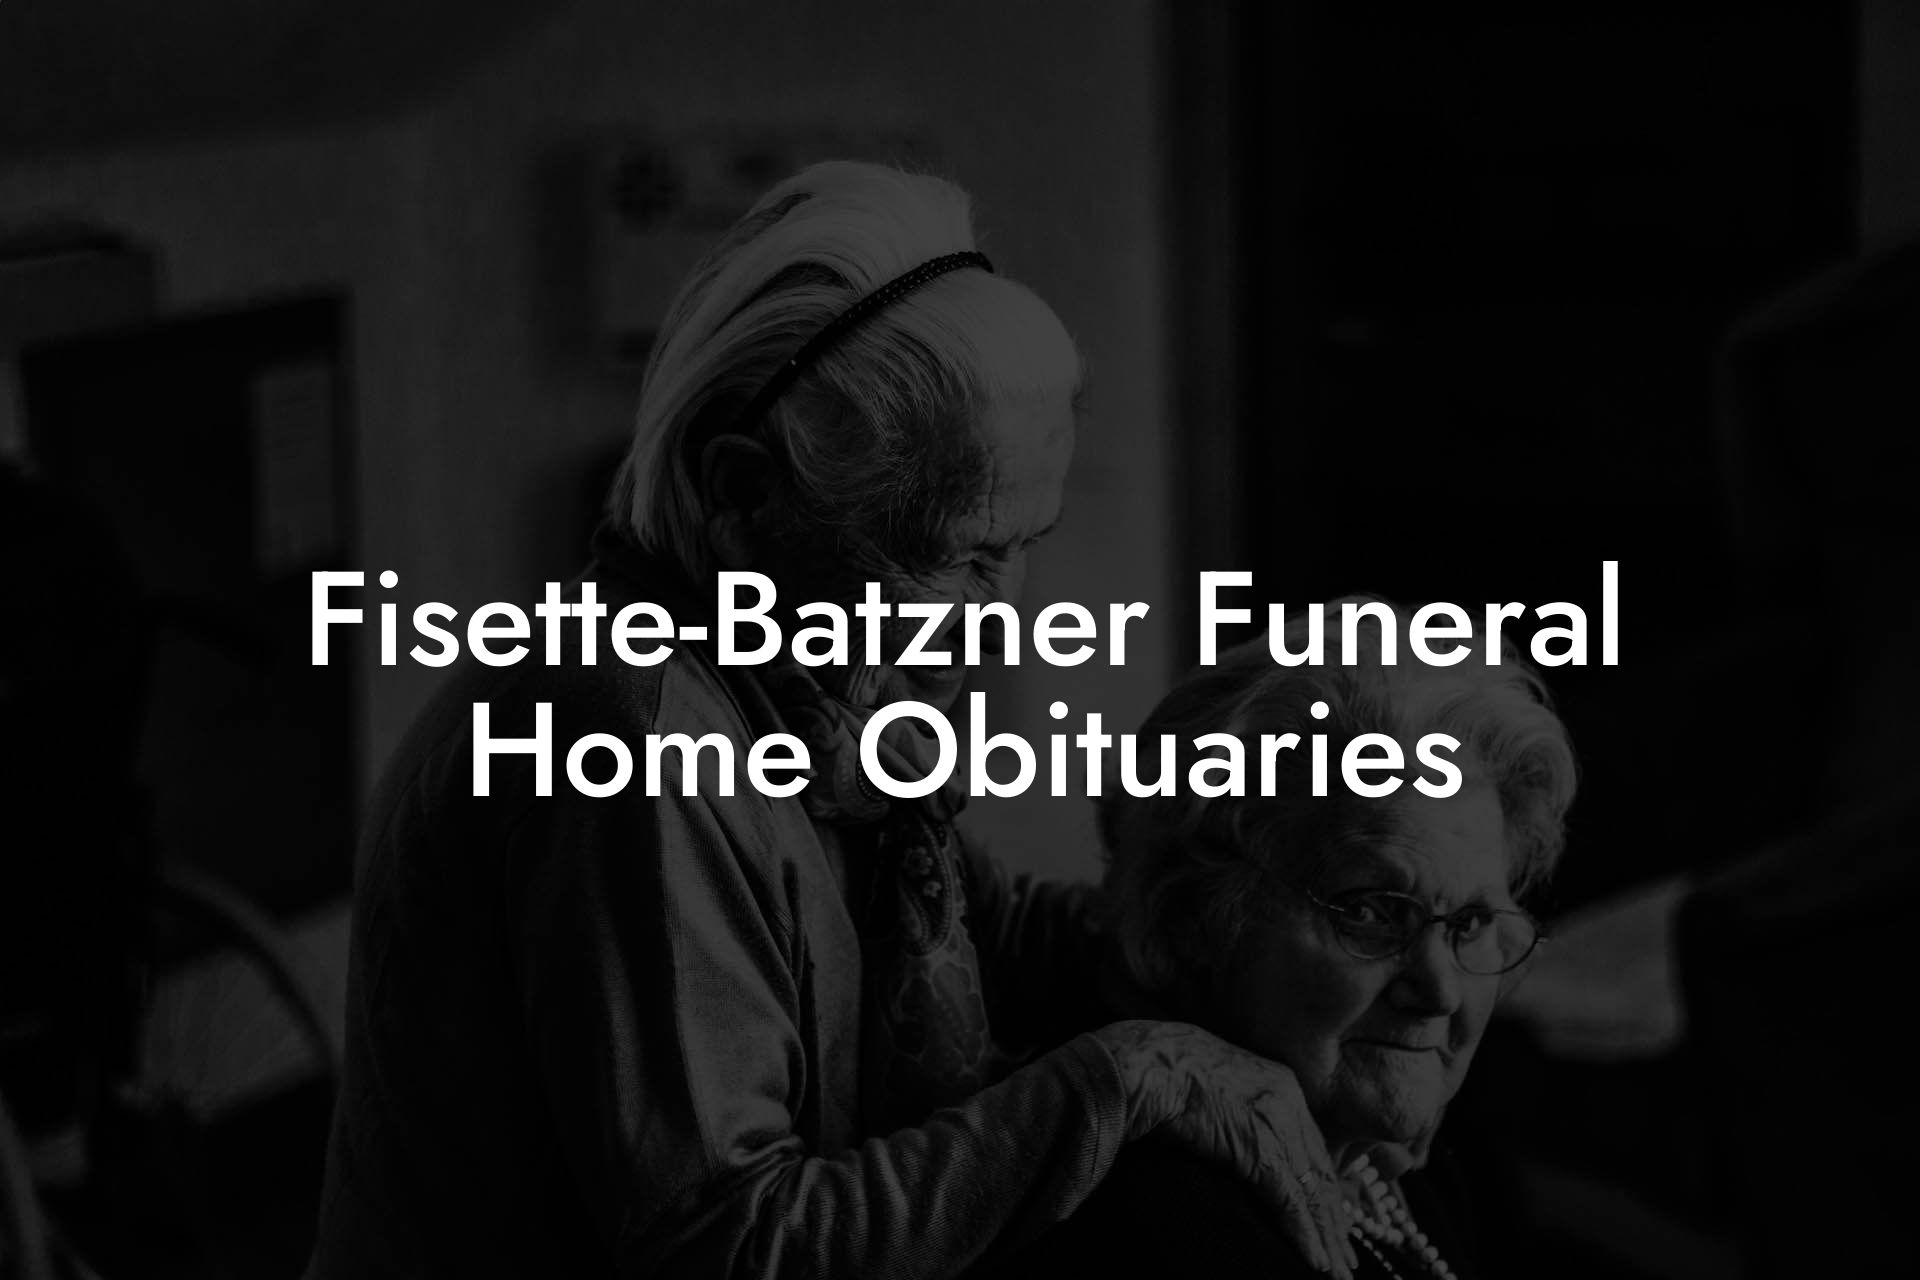 Fisette-Batzner Funeral Home Obituaries